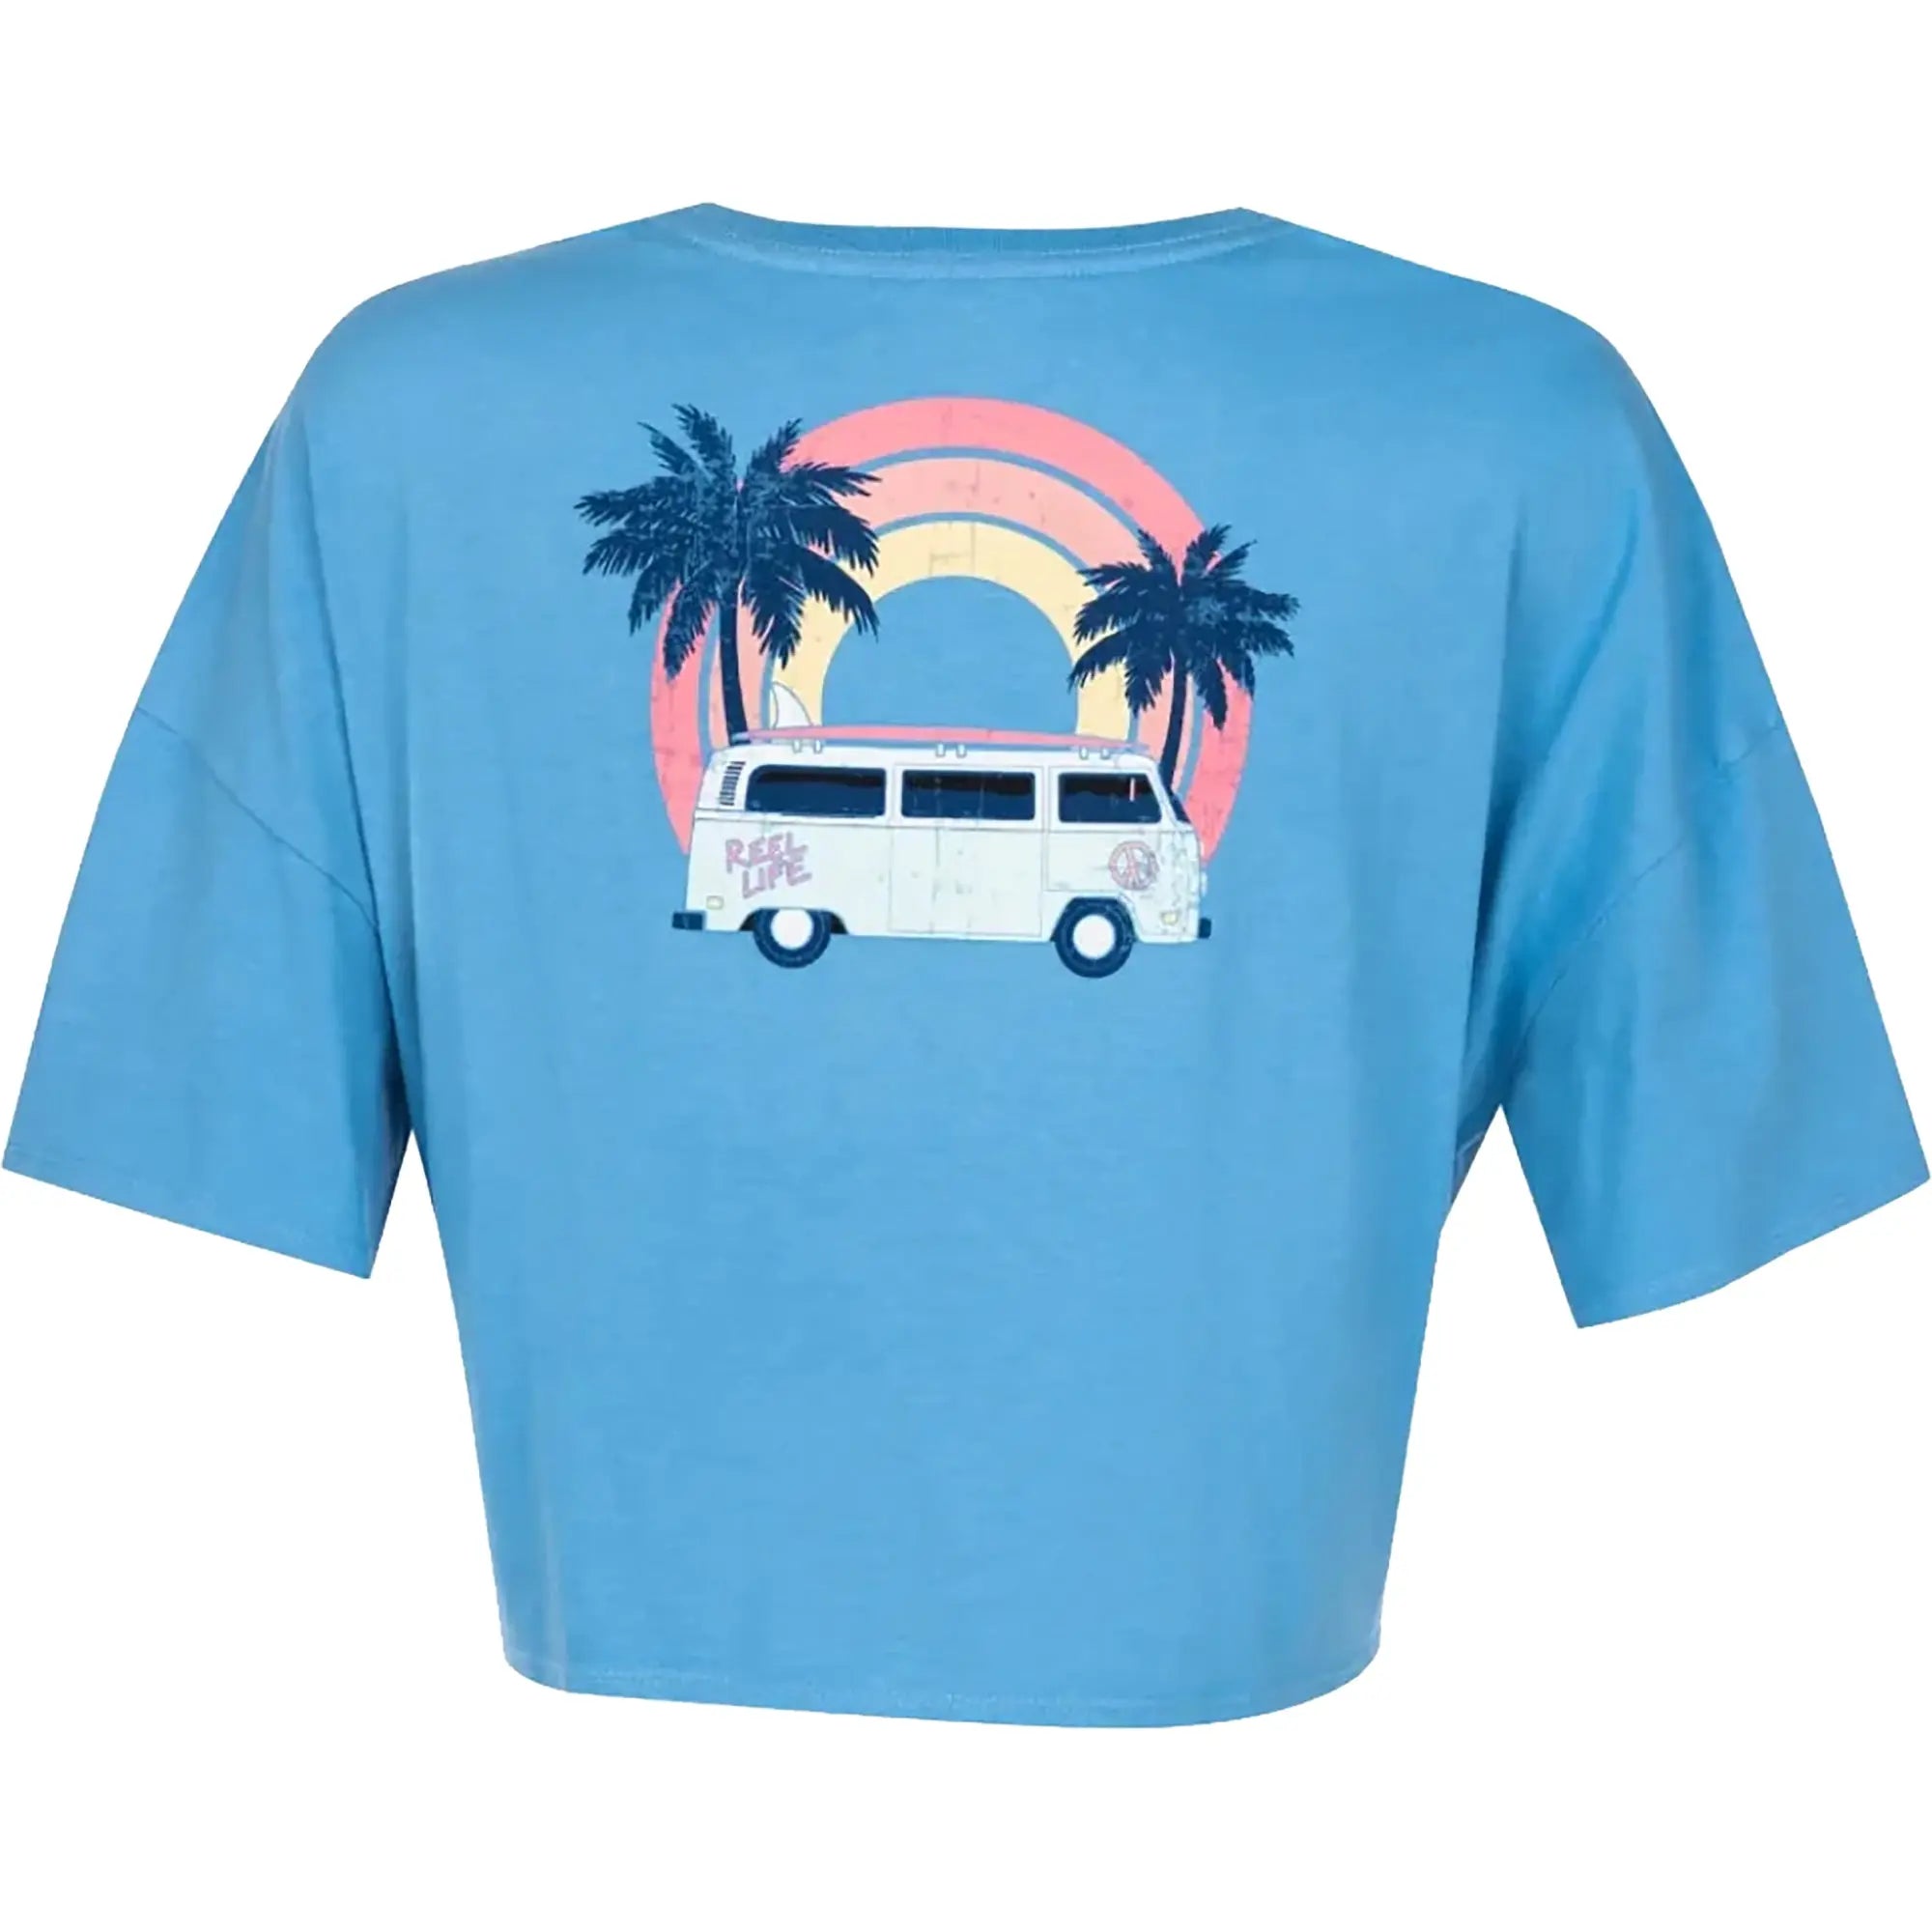 Reel Life Women's Ocean Washed Rainbow Bus Tie Front T-Shirt - Heritage Blue Reel Life